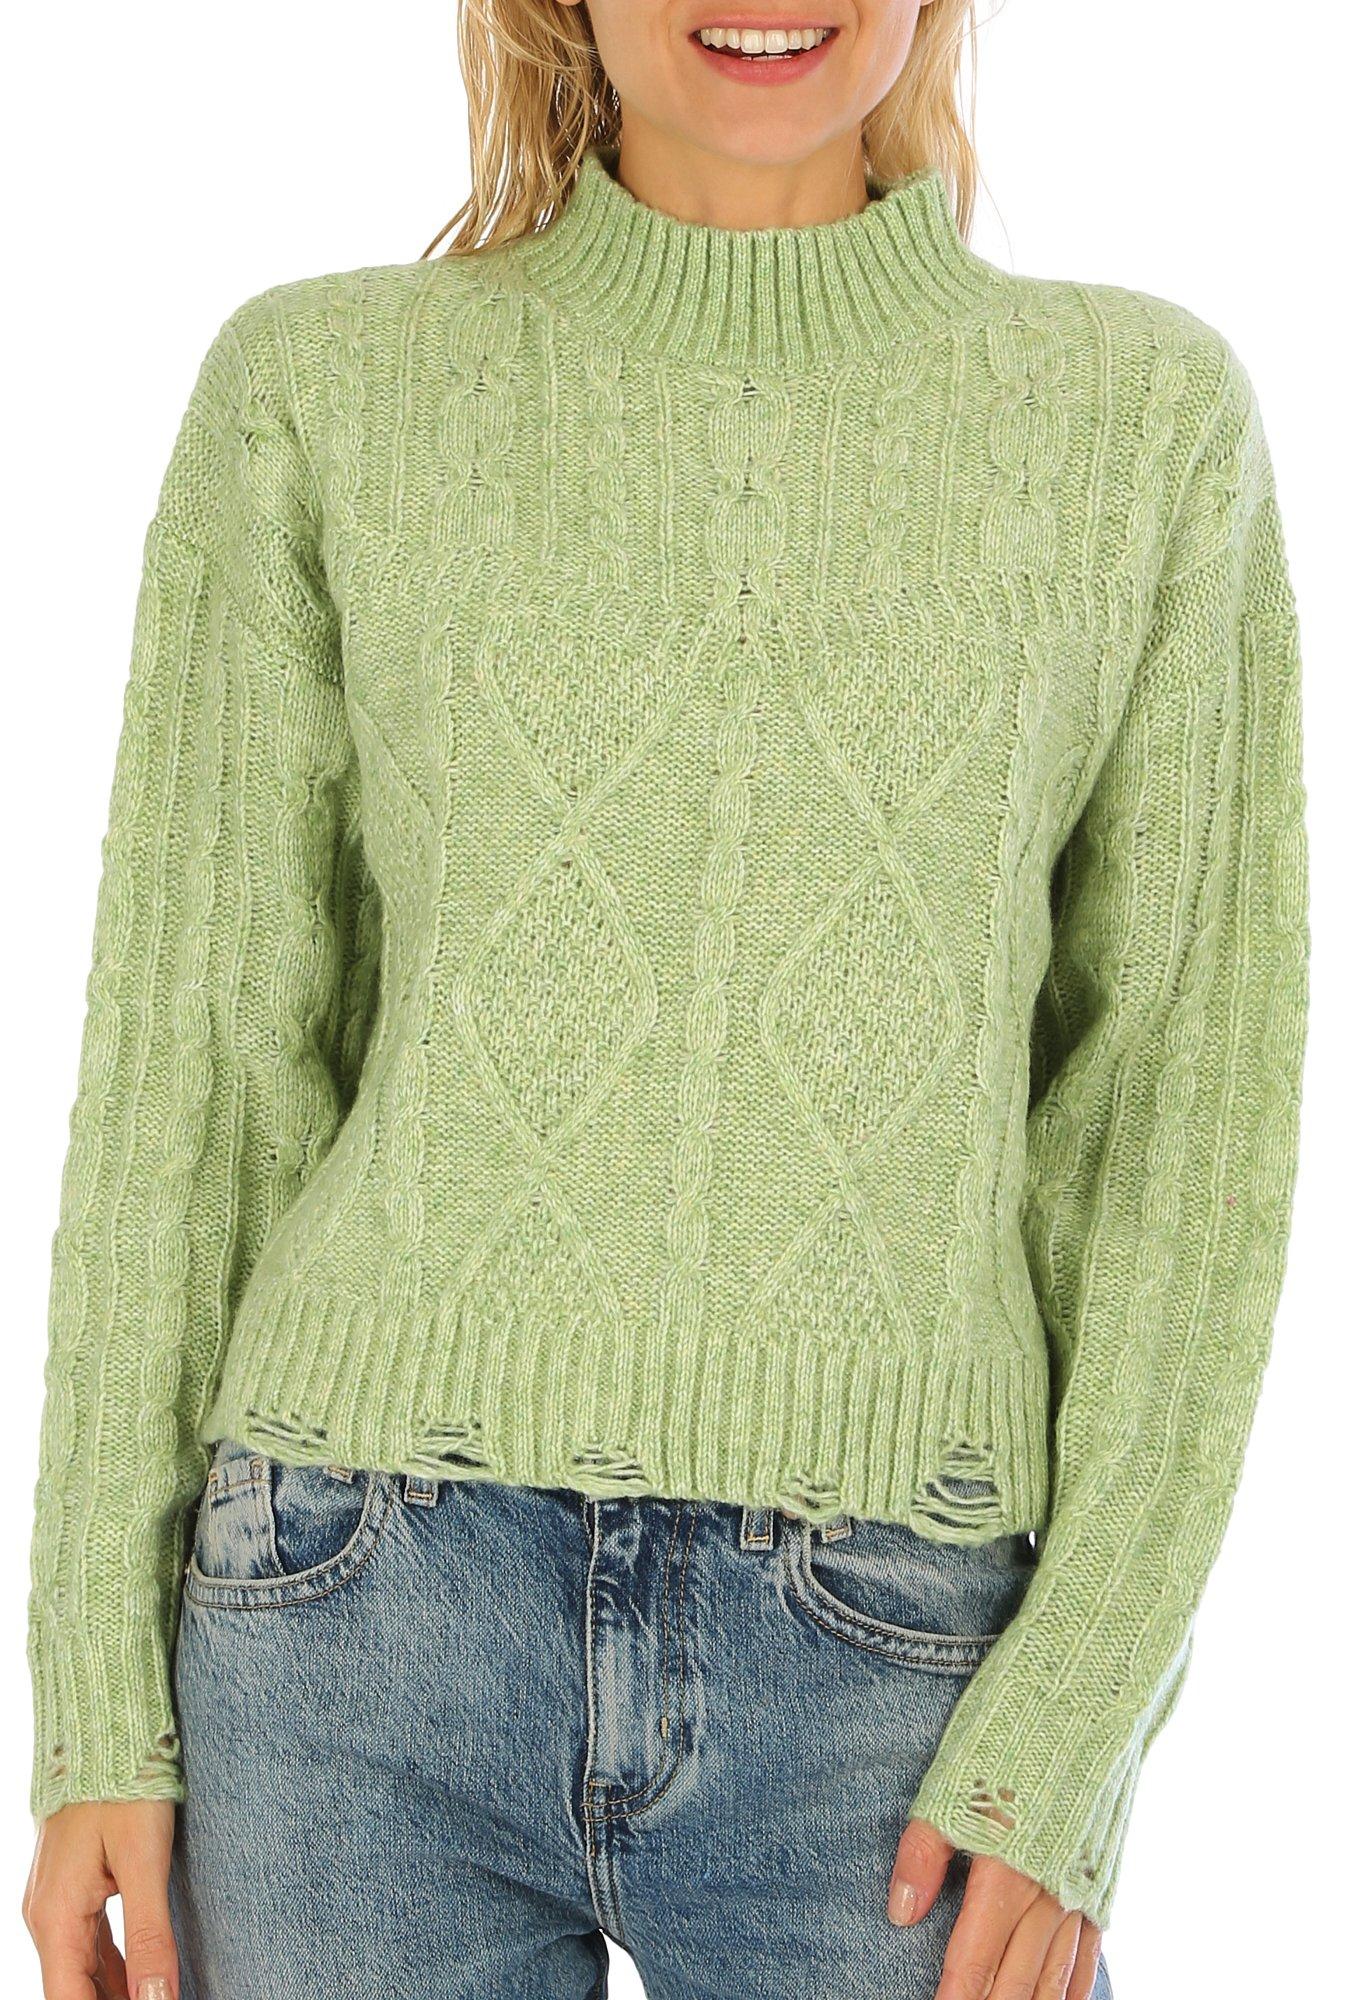 Juniors Knit Sweater